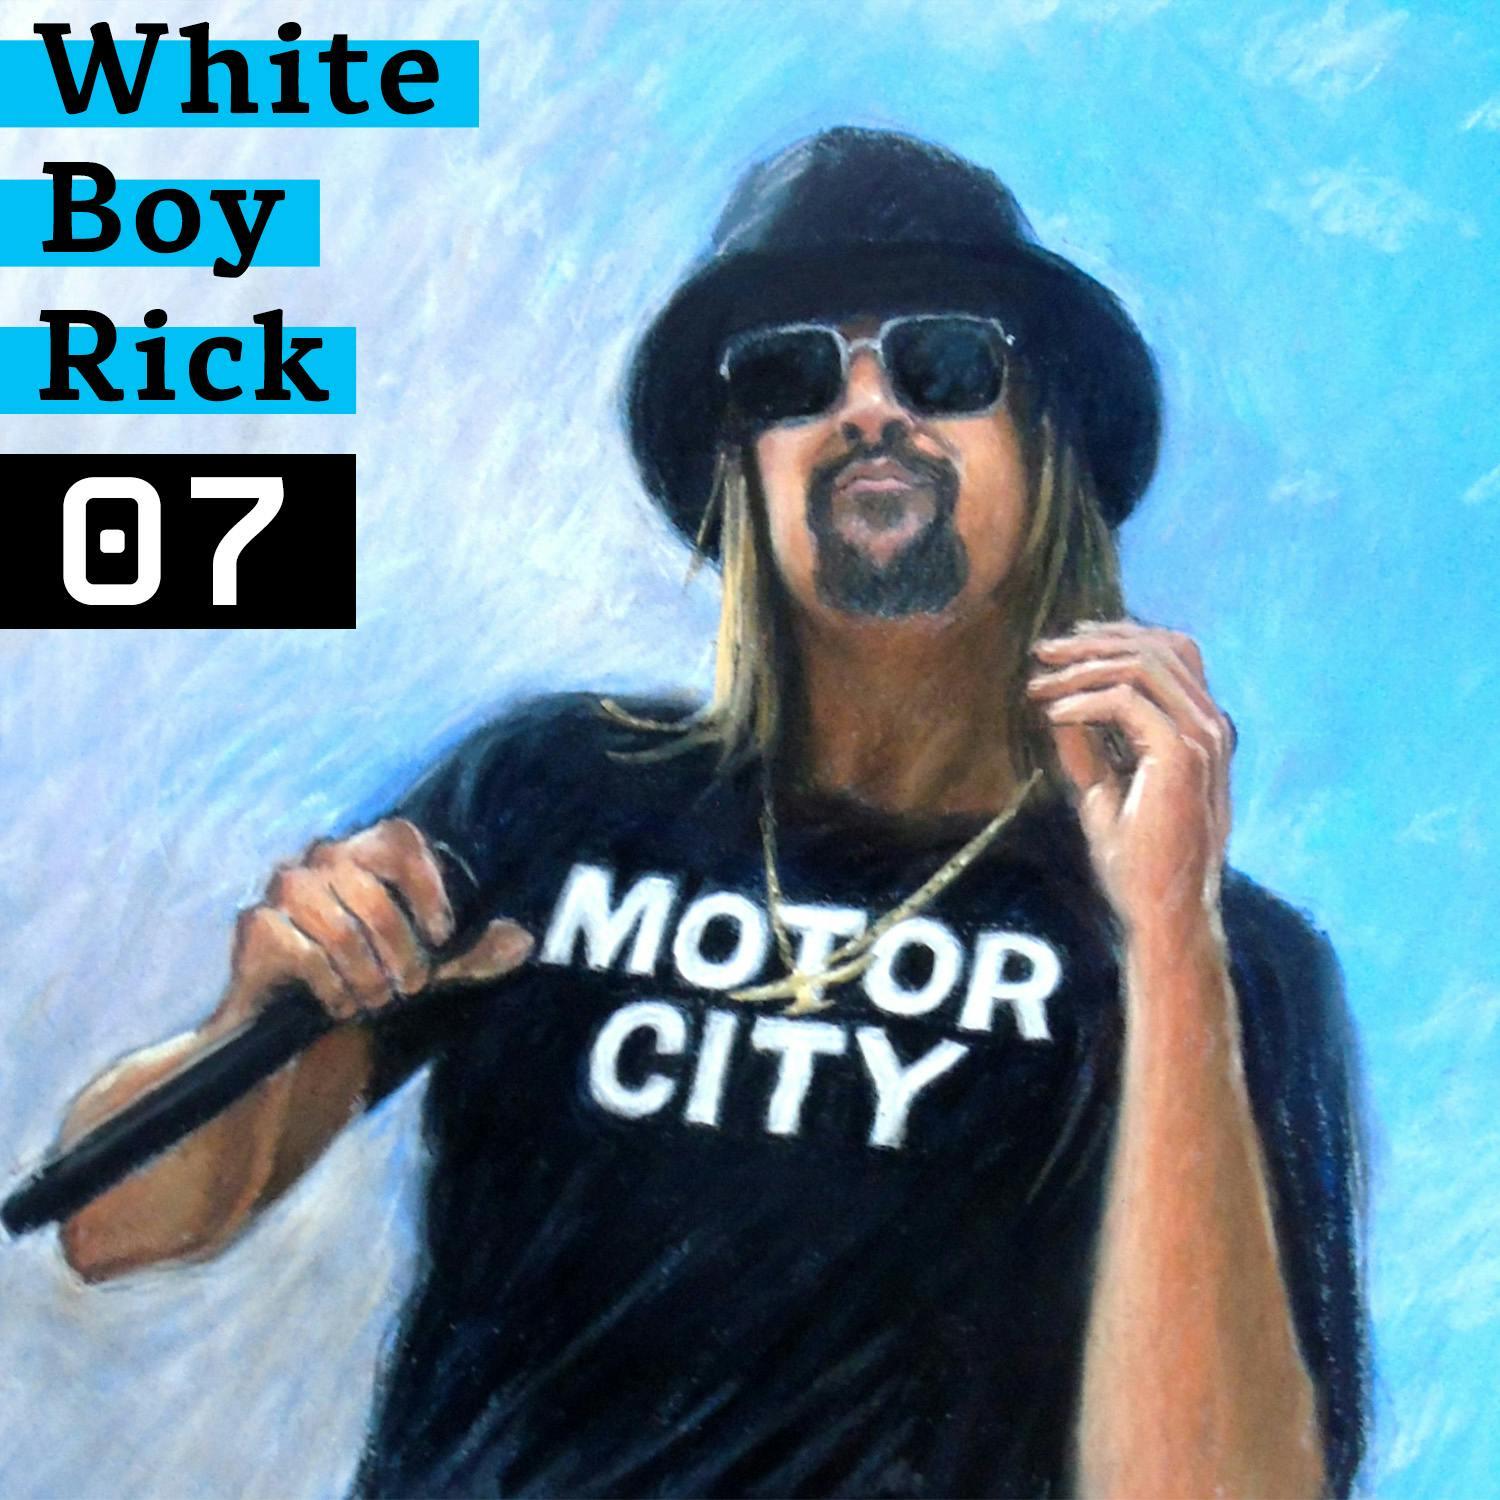 White Boy Rick, Chapter 7 – Kid Rock and White Boy Rick